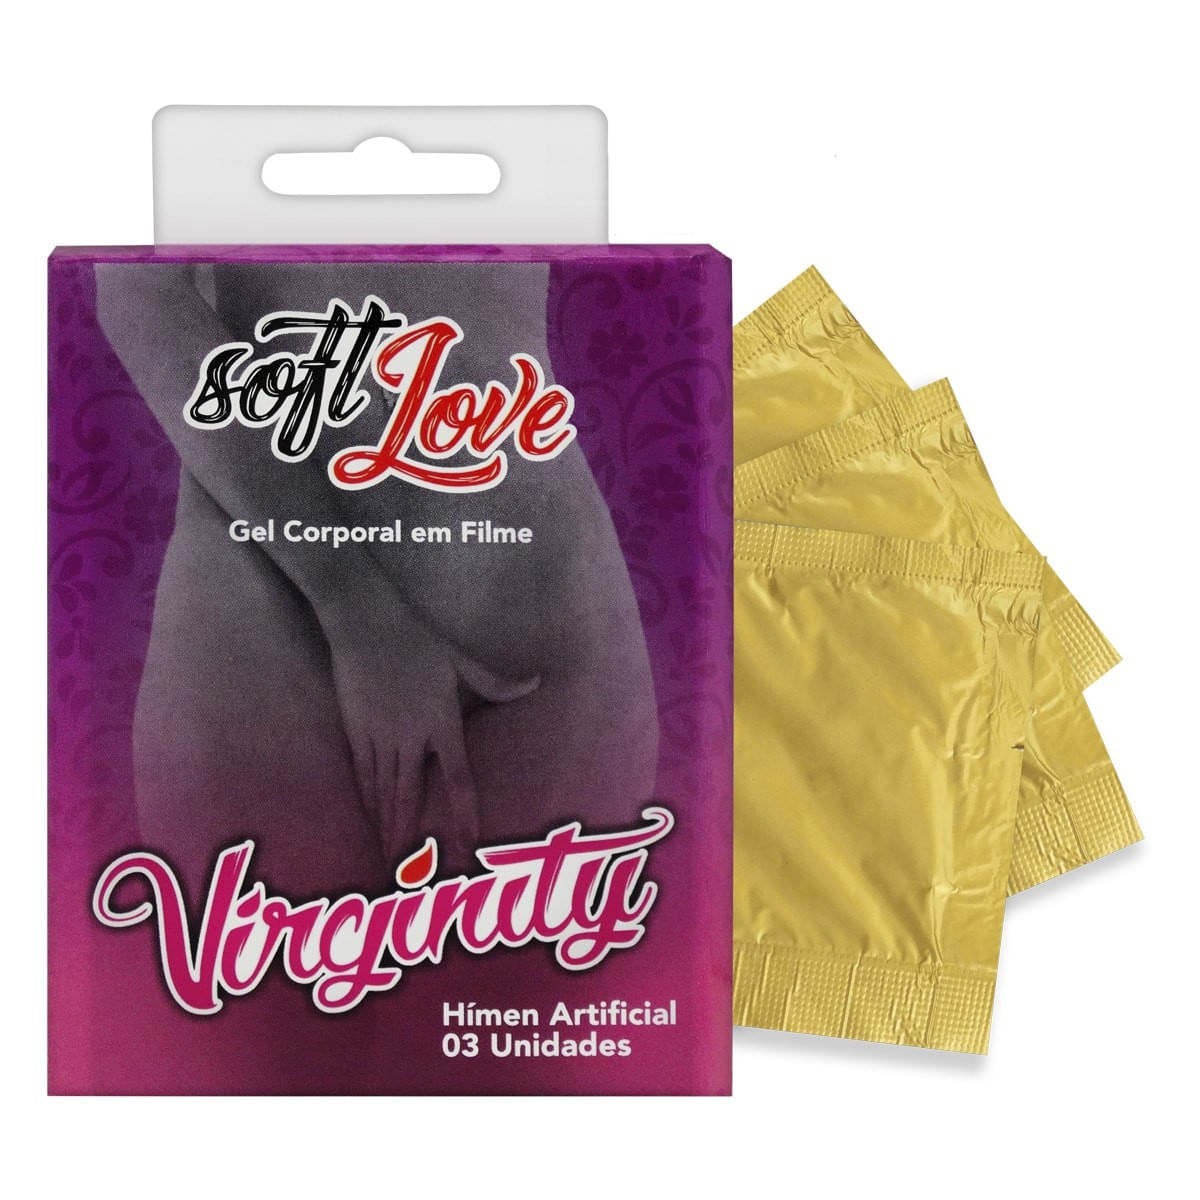 Virginity Hímen Artificial Soft Love